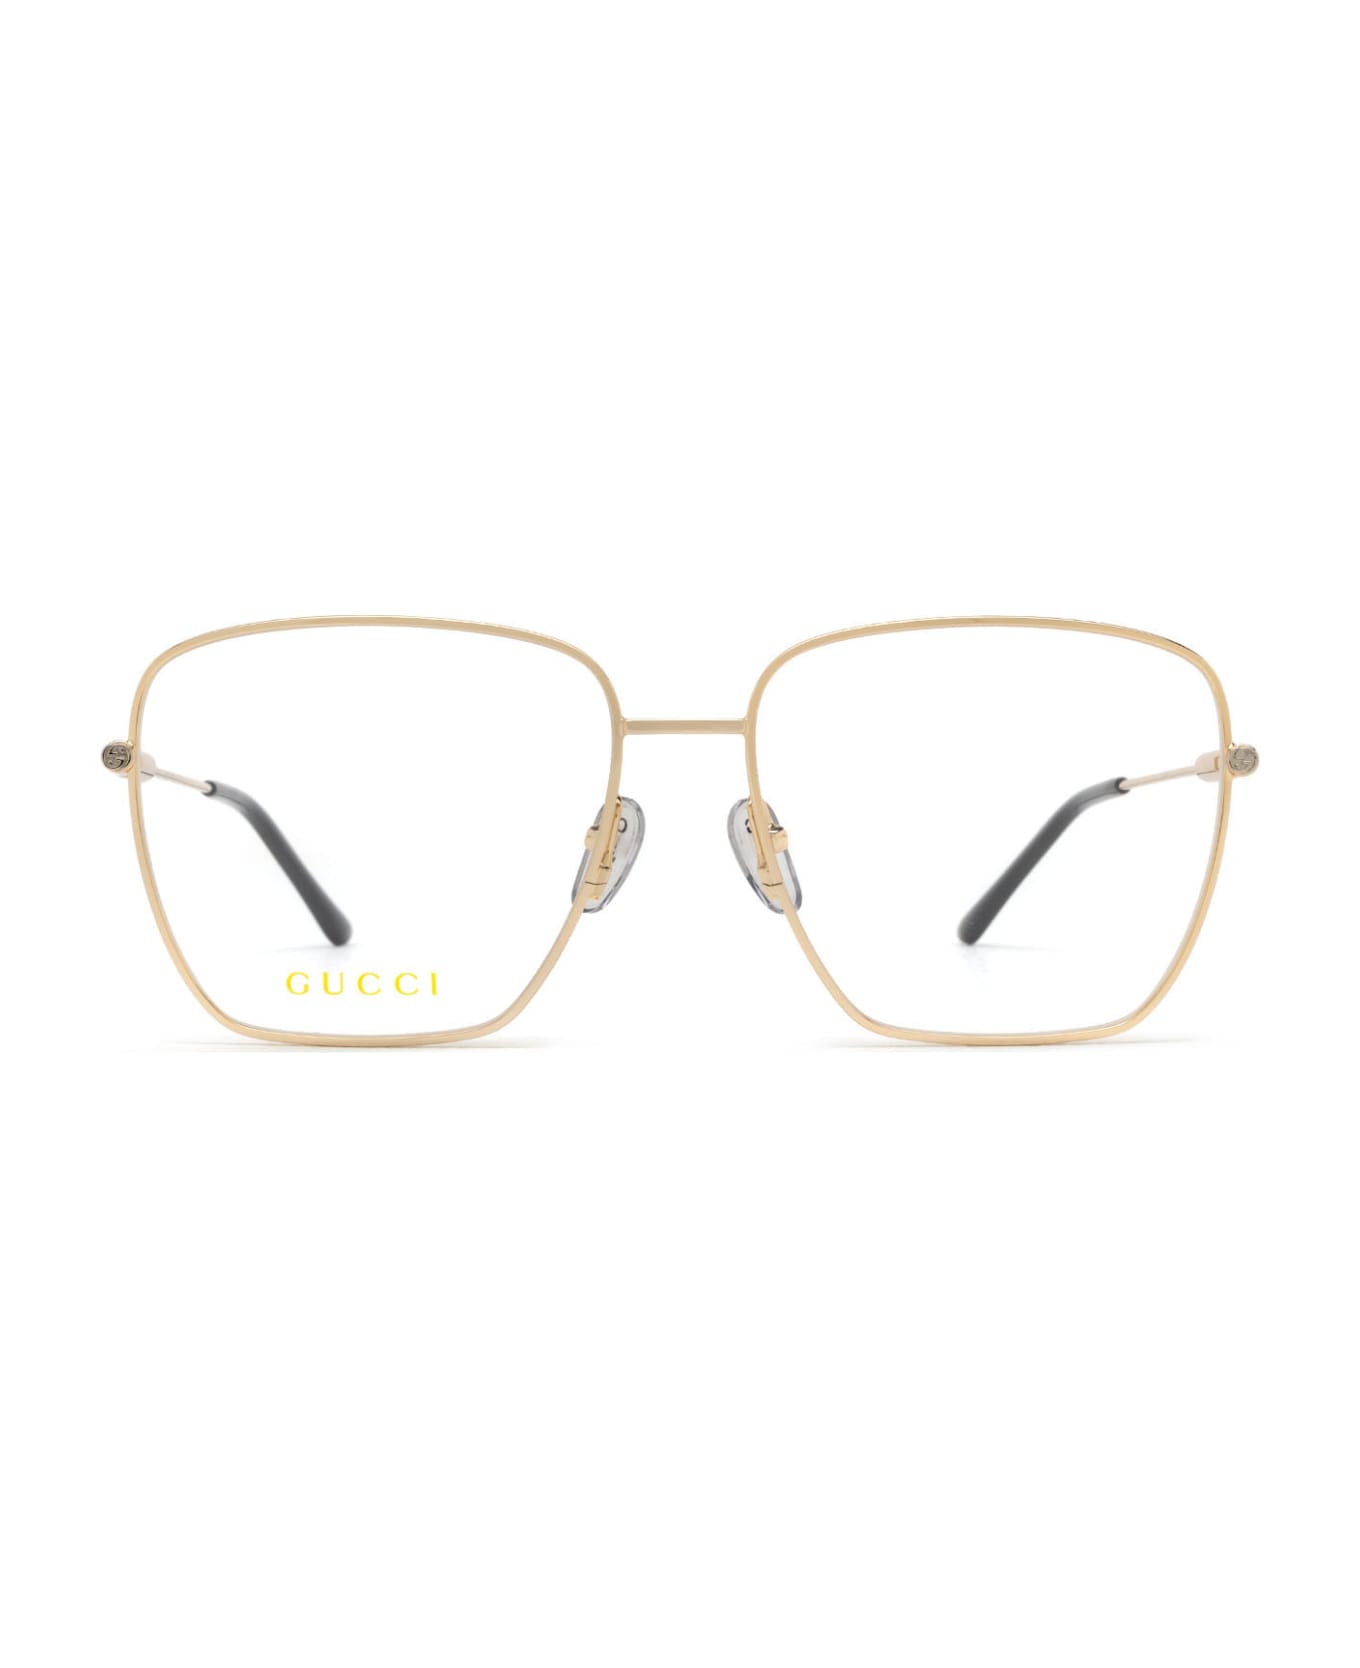 Gucci Eyewear Gg1414o Gold Glasses - Gold